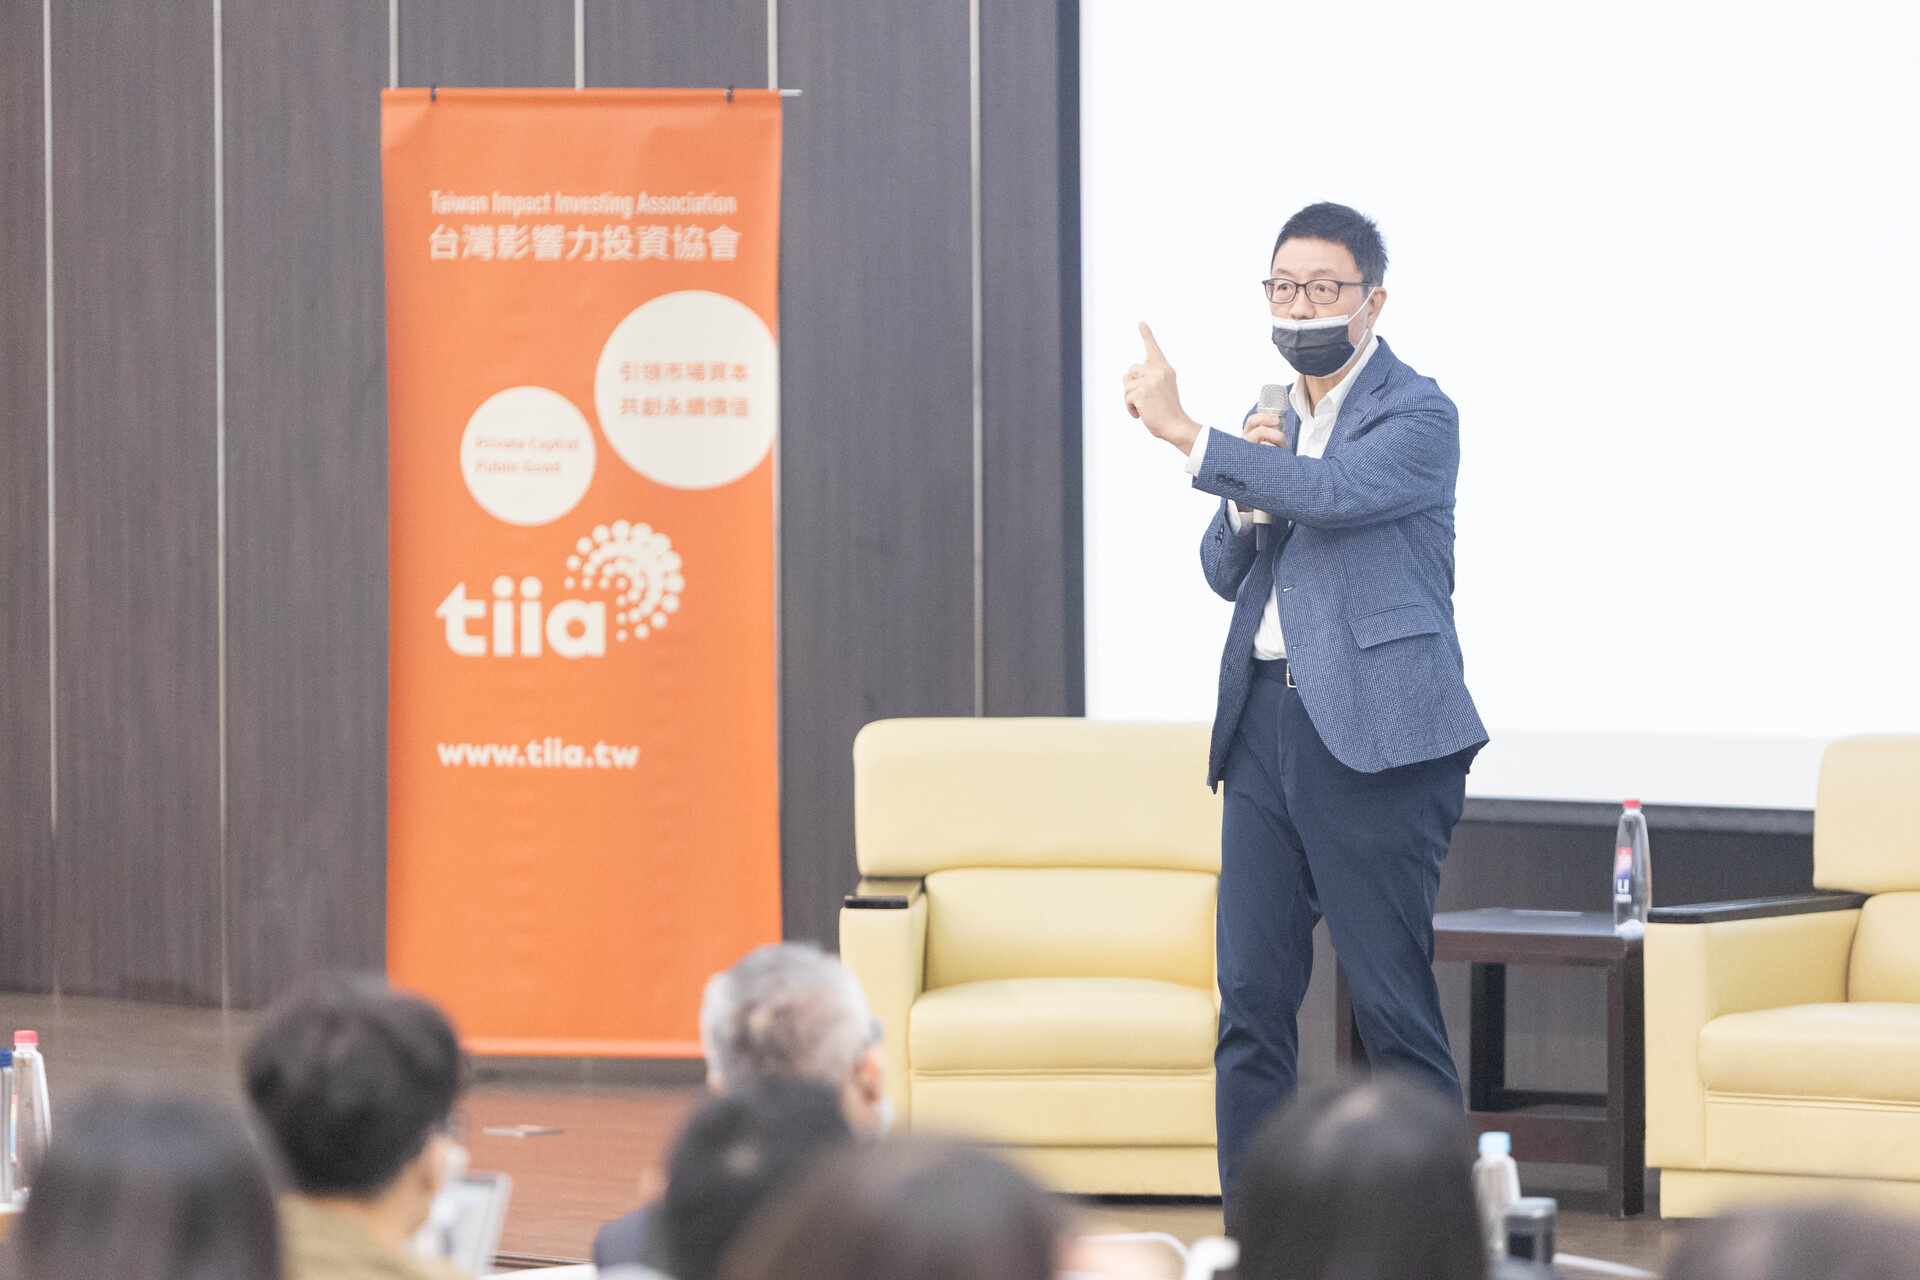 Keynote speech by CEO of Taiwan Impact Investing Association Tao-kuei Wu